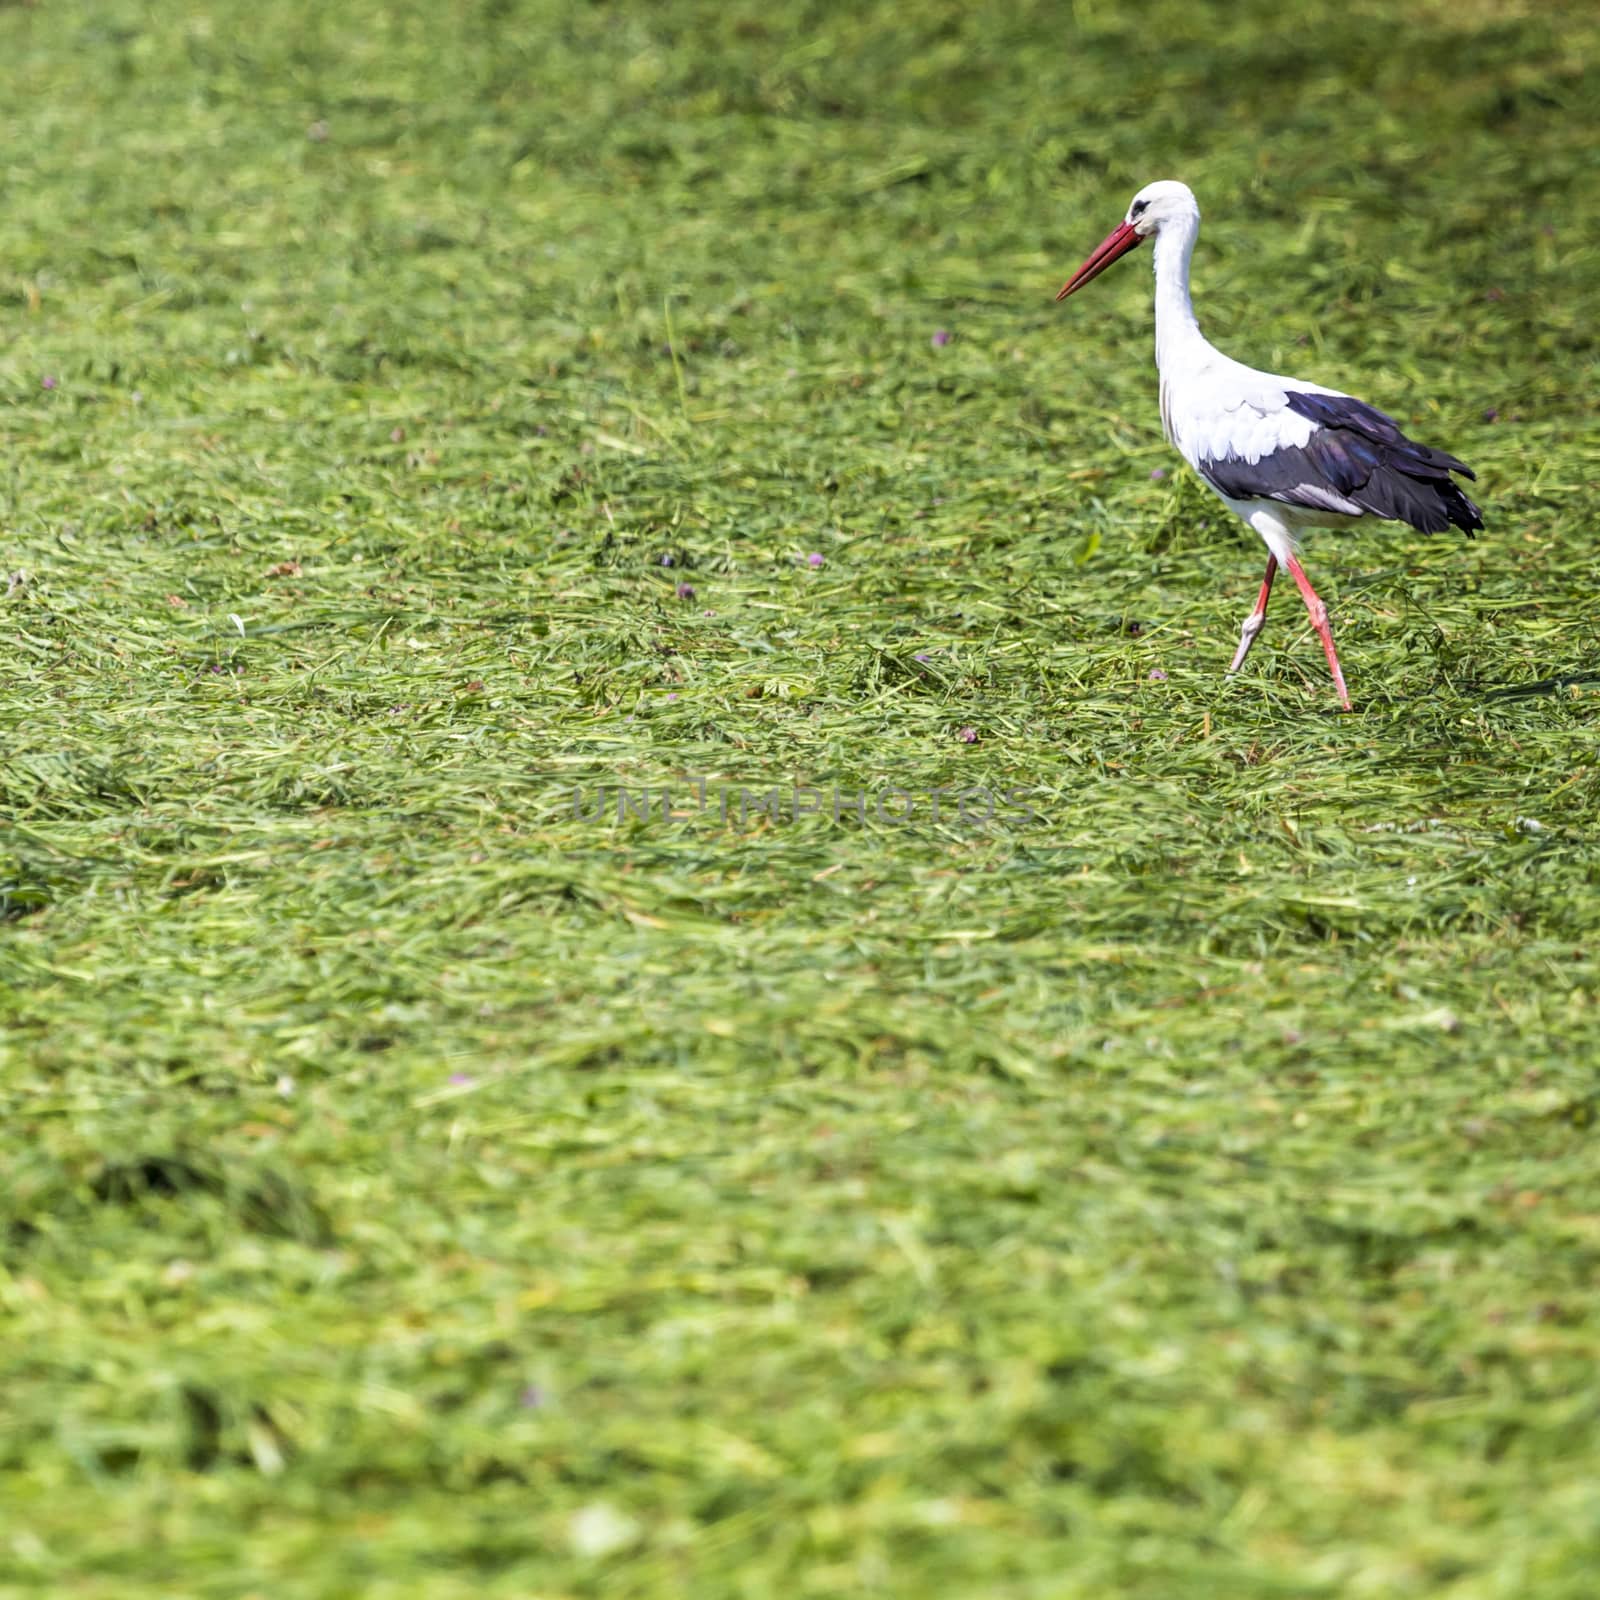 Stork running around the grass field by mariusz_prusaczyk